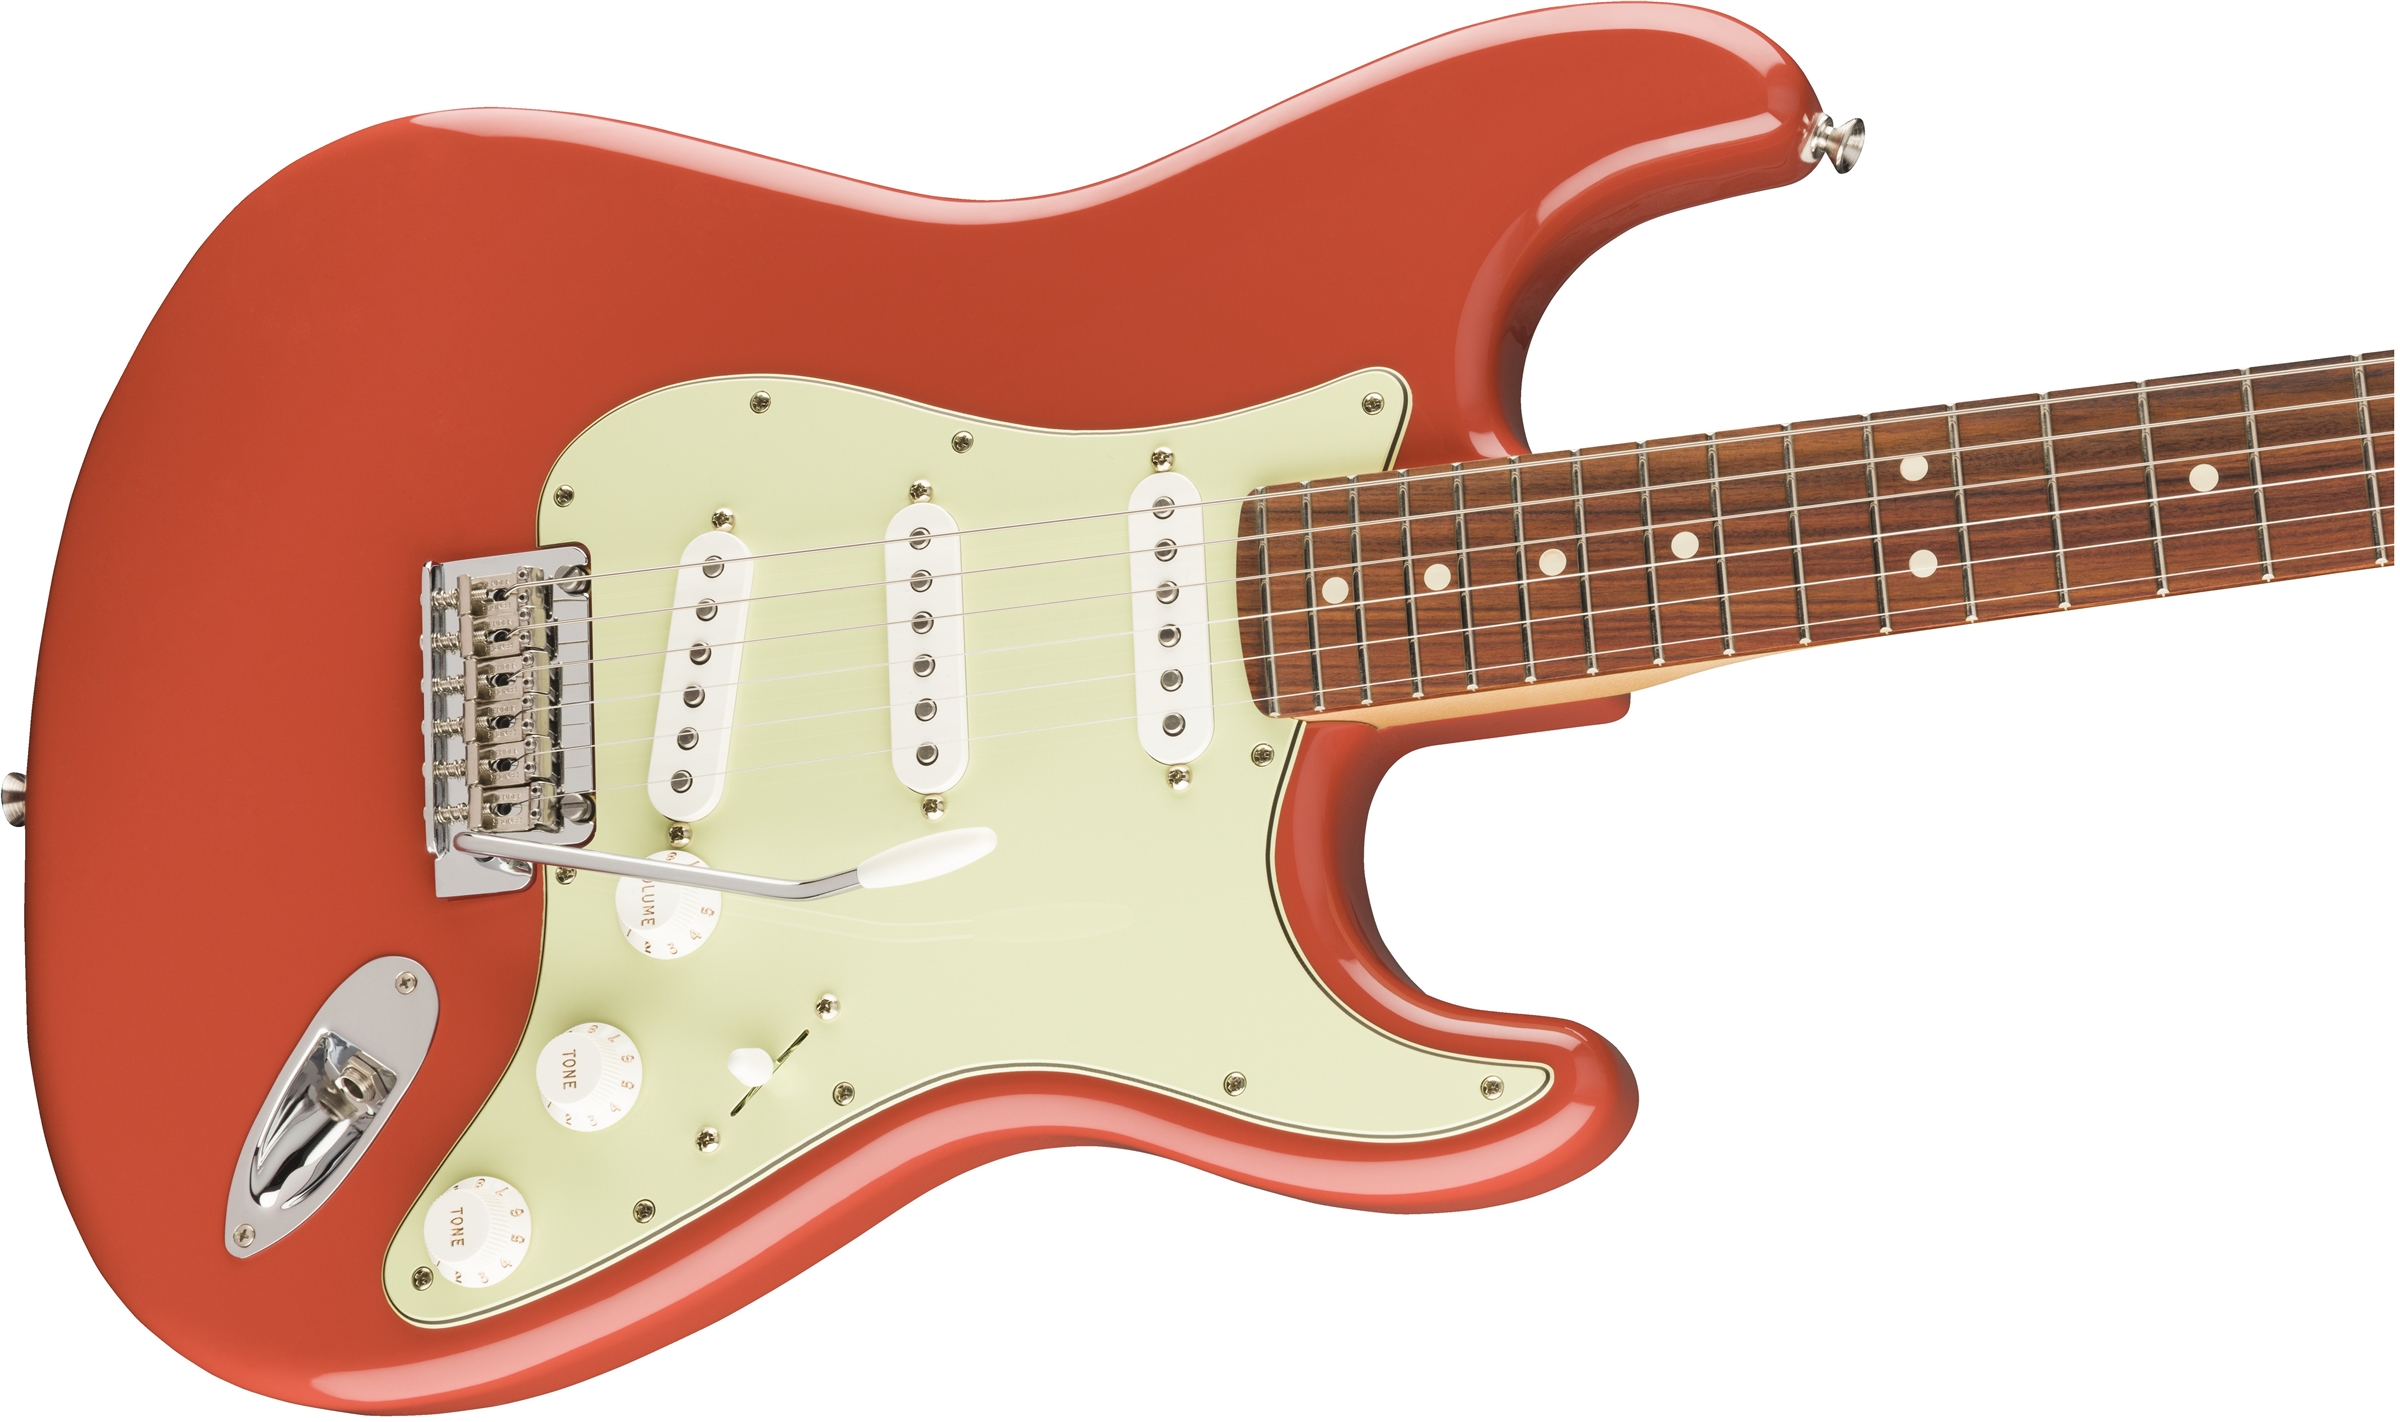 Fender Strat Player Ltd Mex 3s Trem Pf - Fiesta Red - Str shape electric guitar - Variation 3